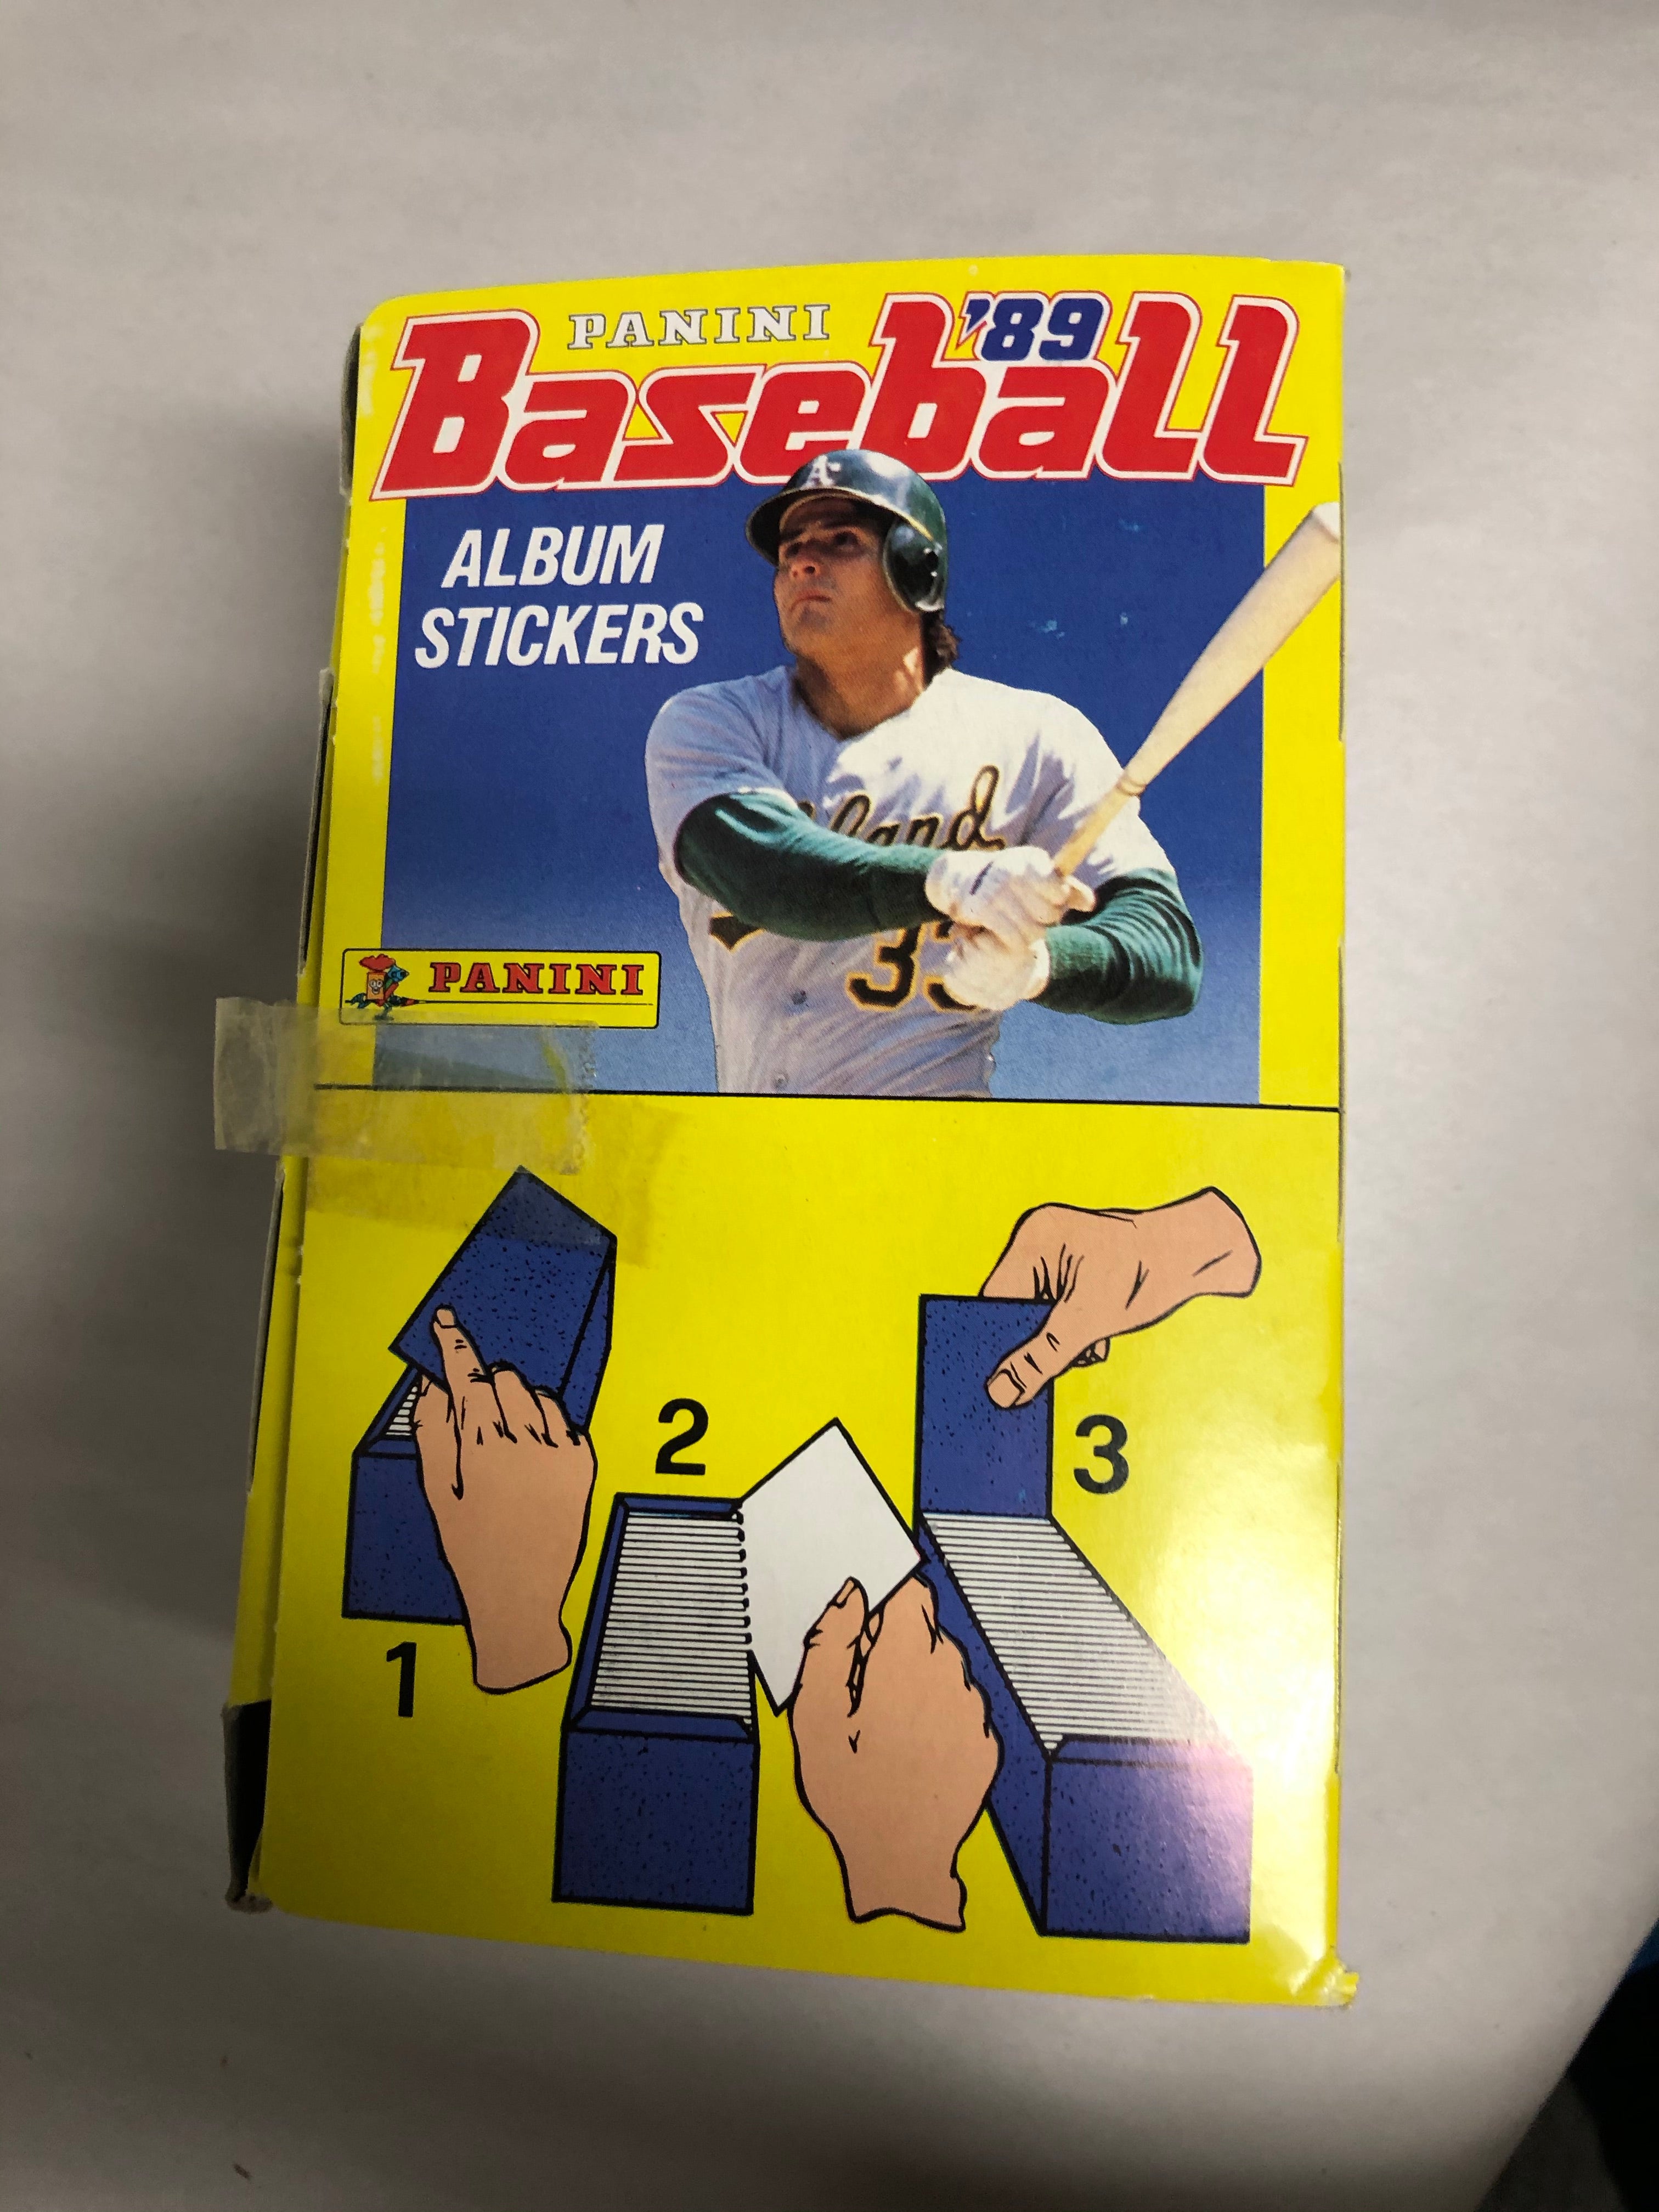 Baseball Panini rare full factory sealed 100 packs box from 1989